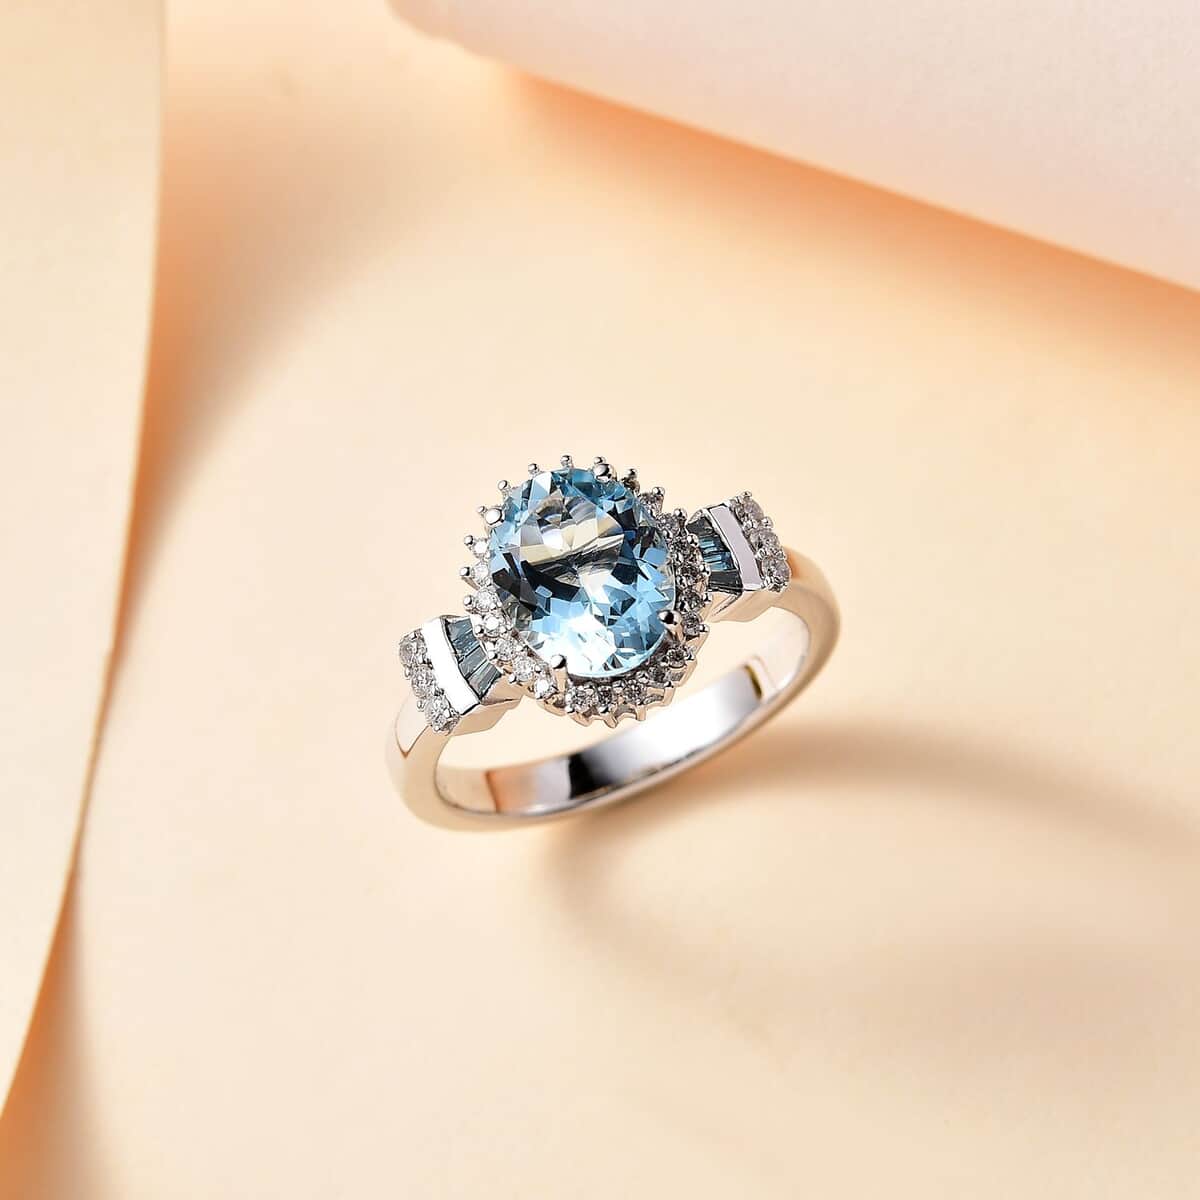 Luxoro 14K White Gold AAA Santa Maria Aquamarine and I2-I3 Venice Blue and White Diamond Ring (Size 9.0) 4.40 Grams 1.85 ctw image number 1